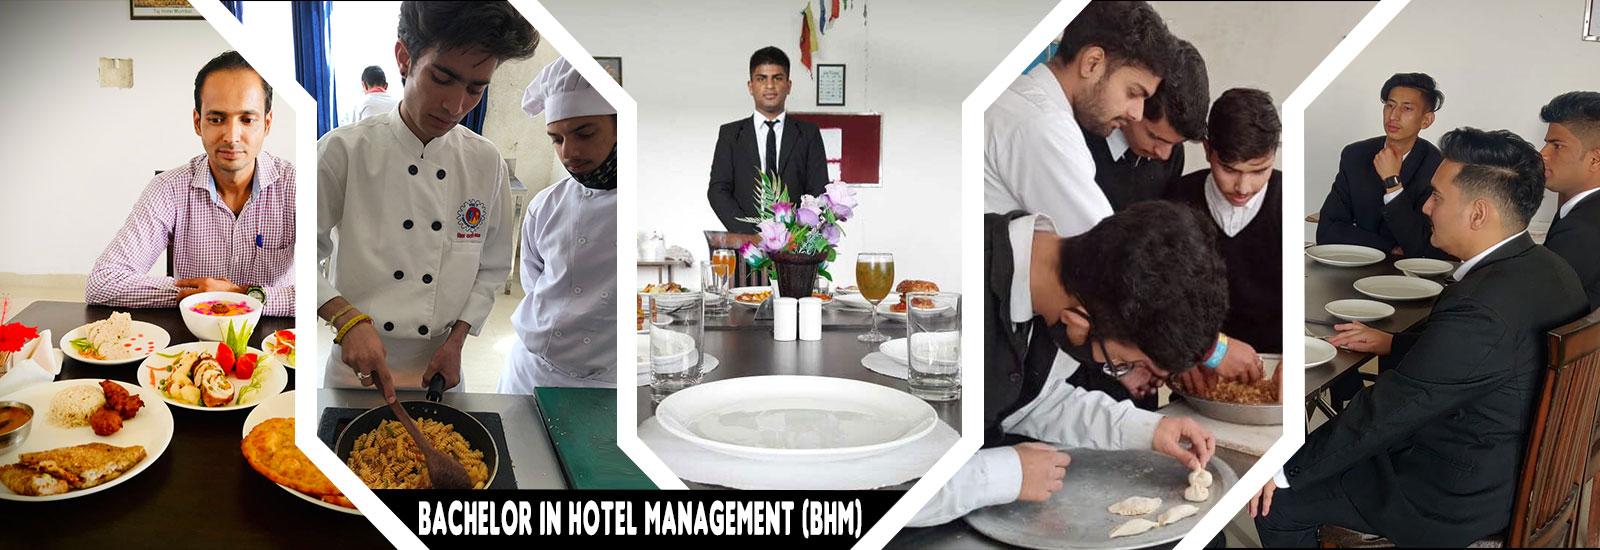 bachelor in hotel management